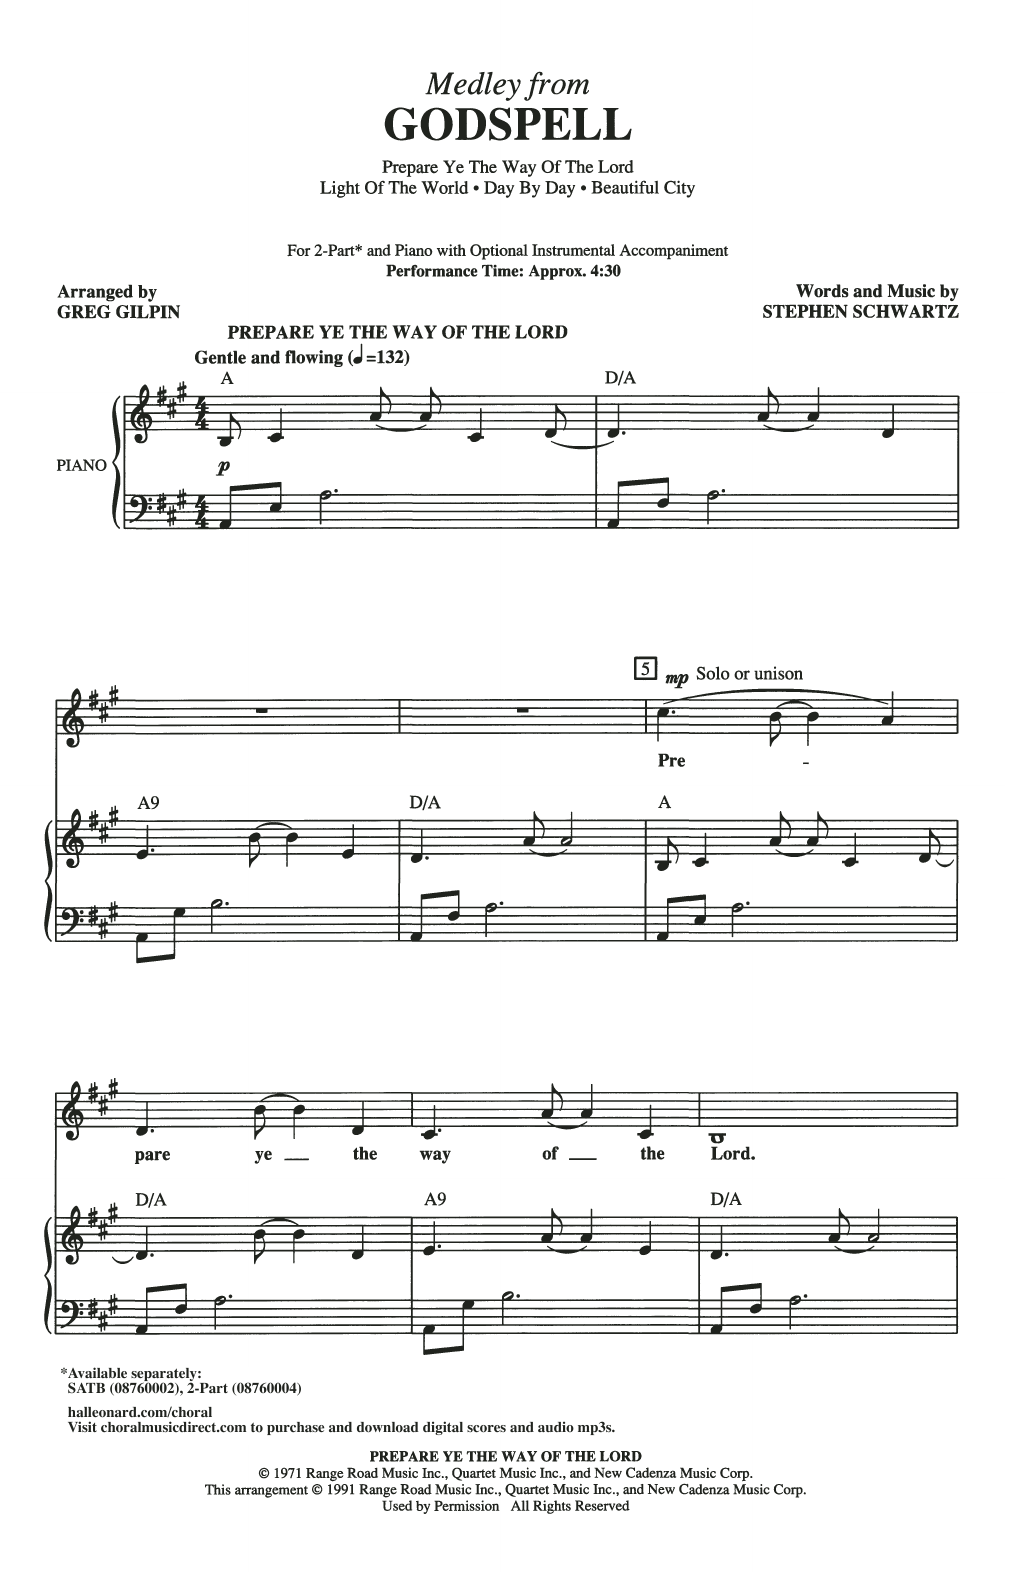 Stephen Schwartz Godspell Medley (arr. Greg Gilpin) Sheet Music Notes & Chords for 2-Part Choir - Download or Print PDF